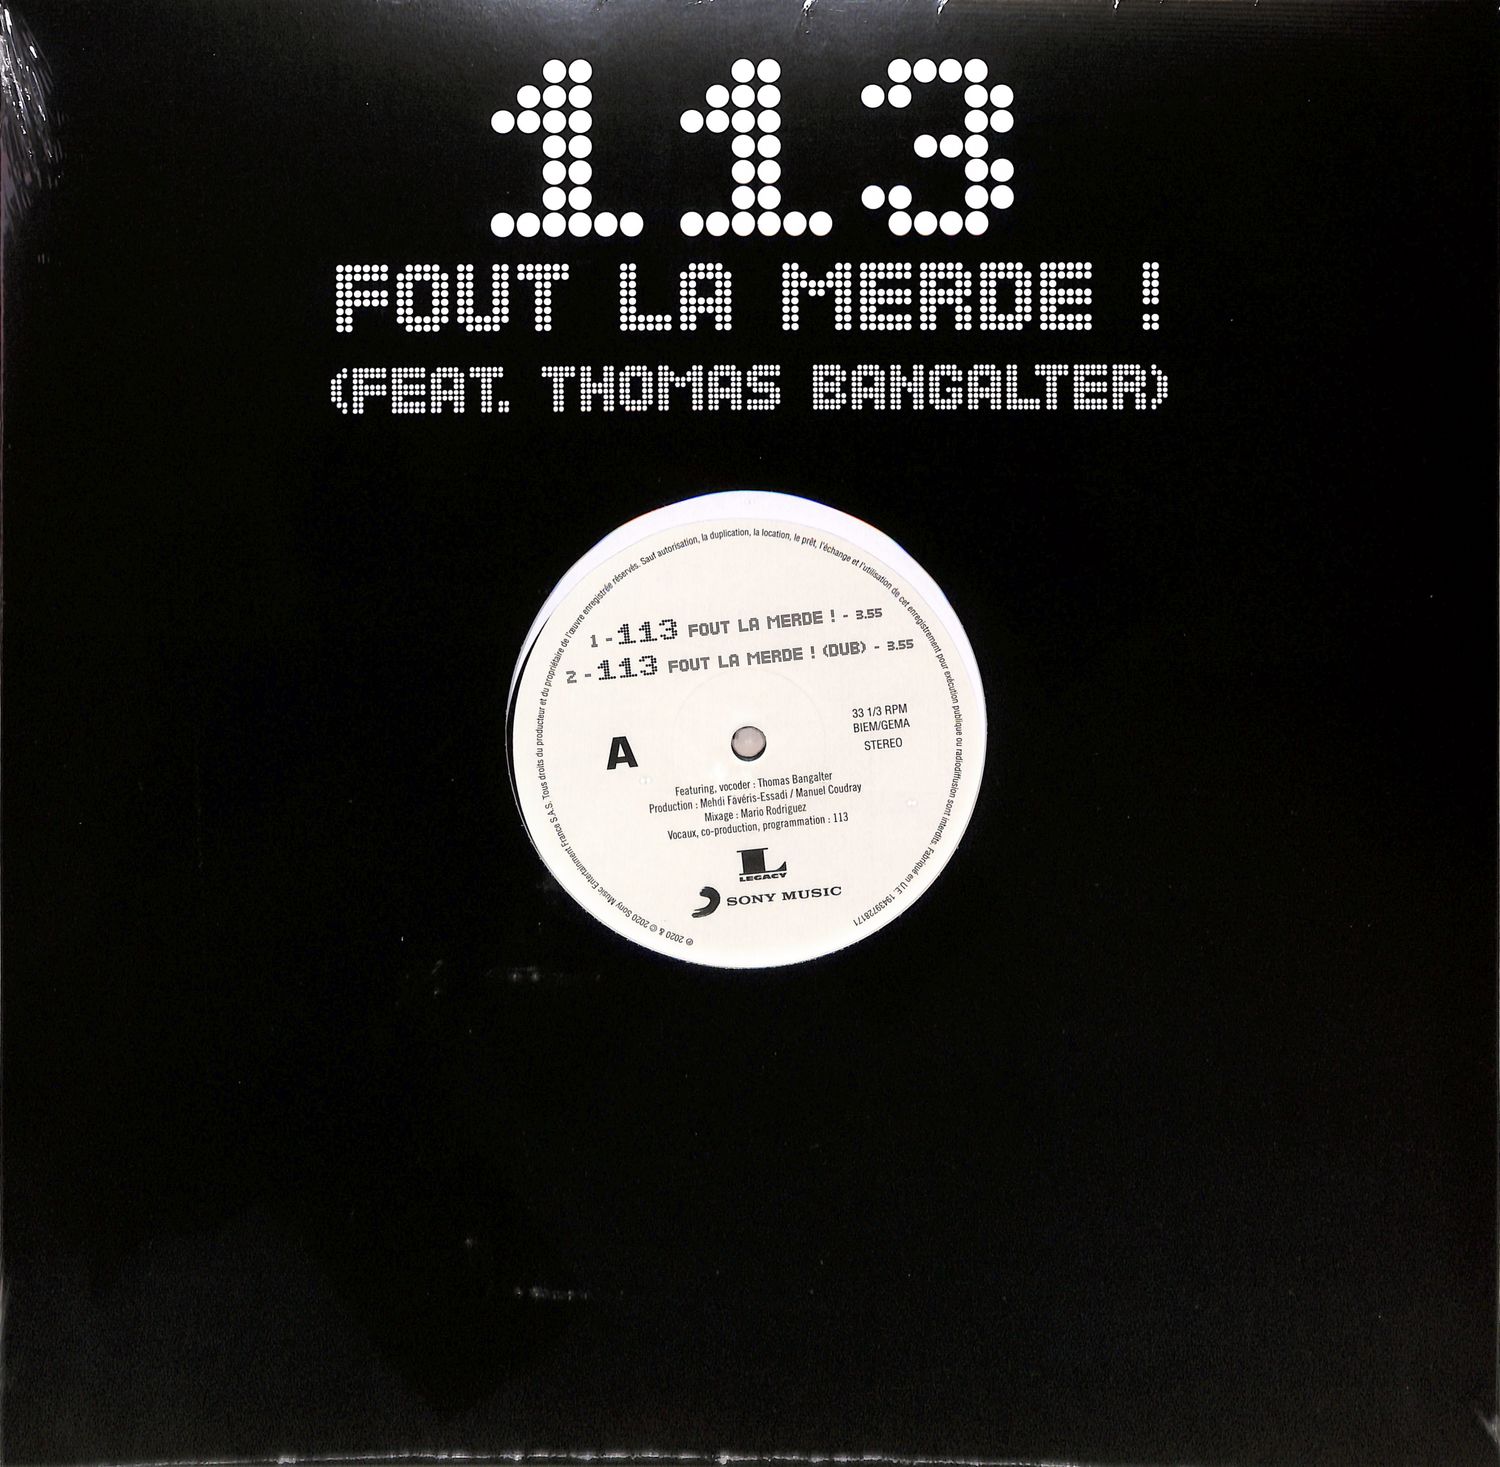 113 Feat. Thomas Bangalter - FOUT LA MERDE